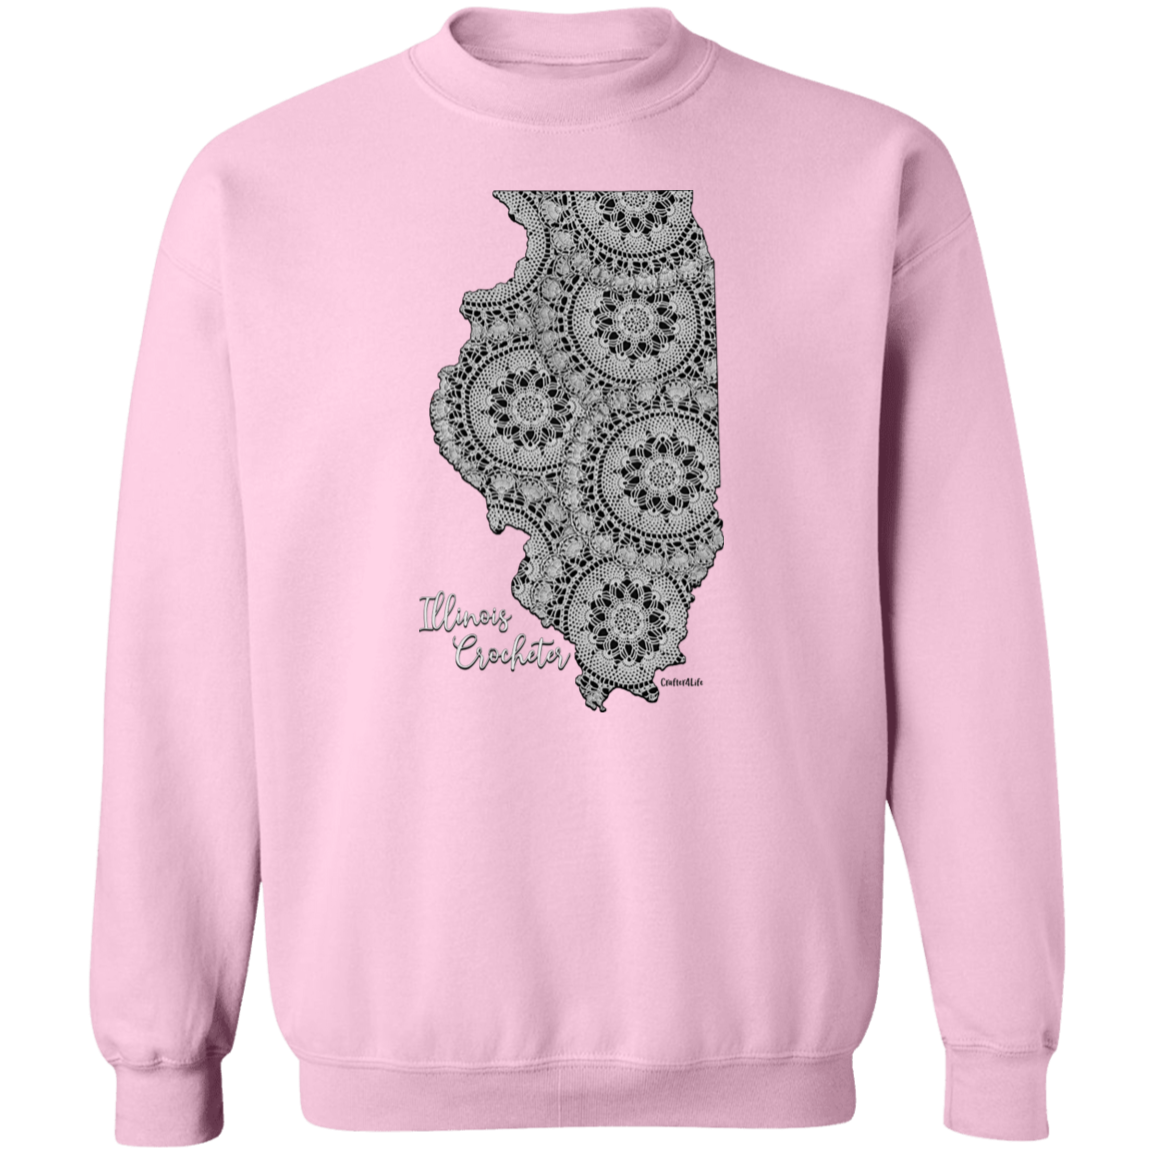 Illinois Crocheter Crewneck Pullover Sweatshirt